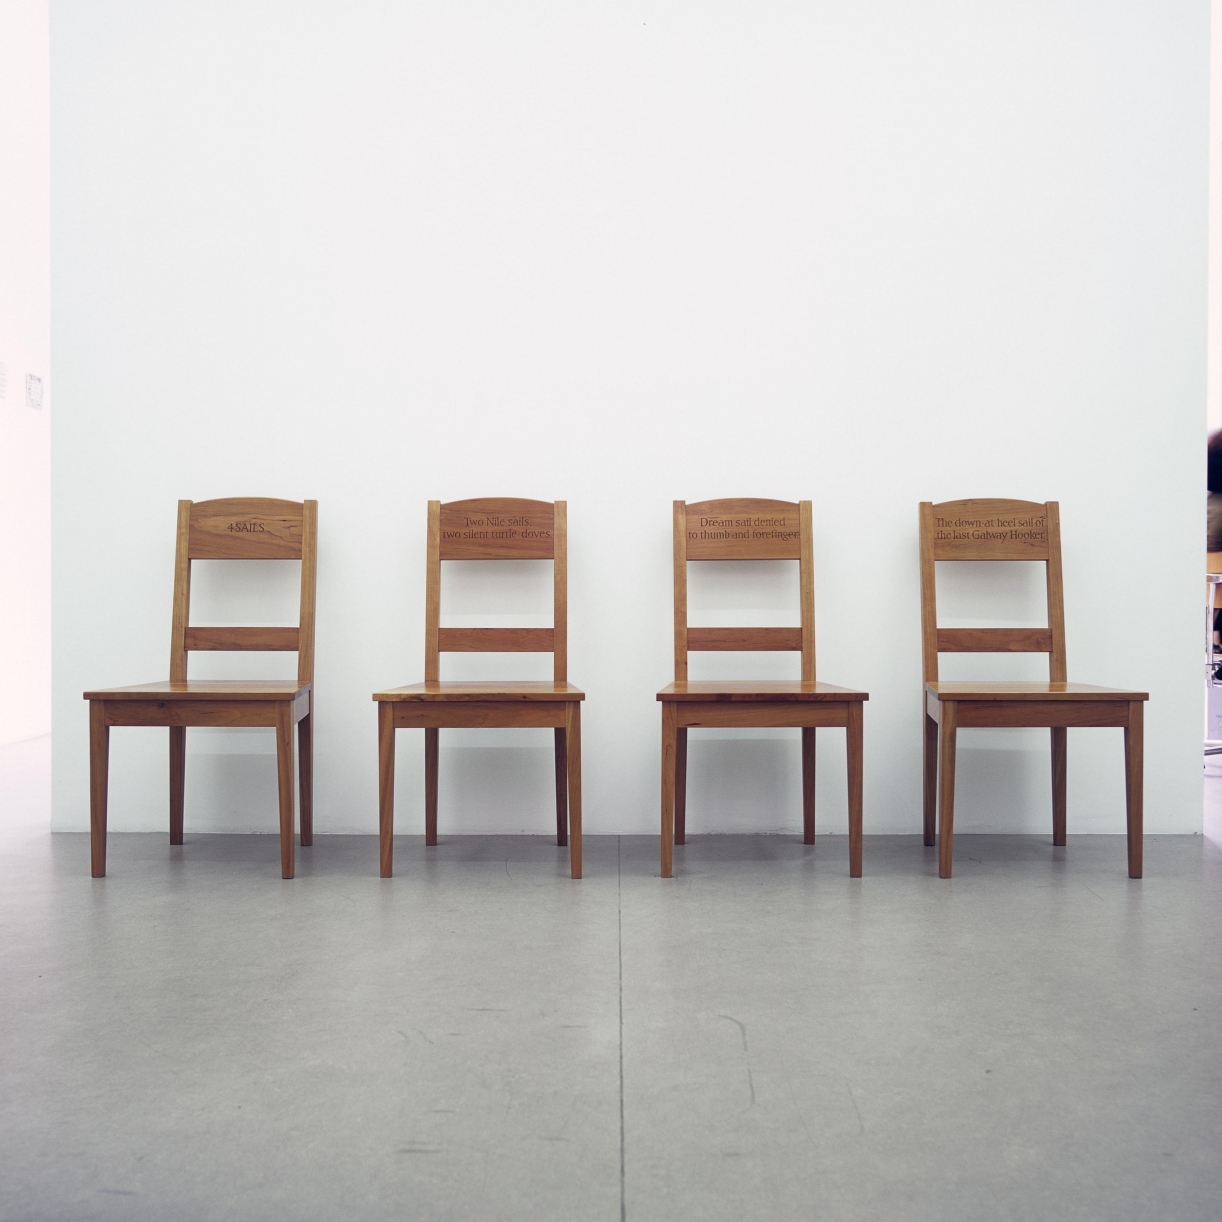 Sails, 2000 with Adam Jackson, 4 cherry wood chairs, 92 x 50 x 43 cm each